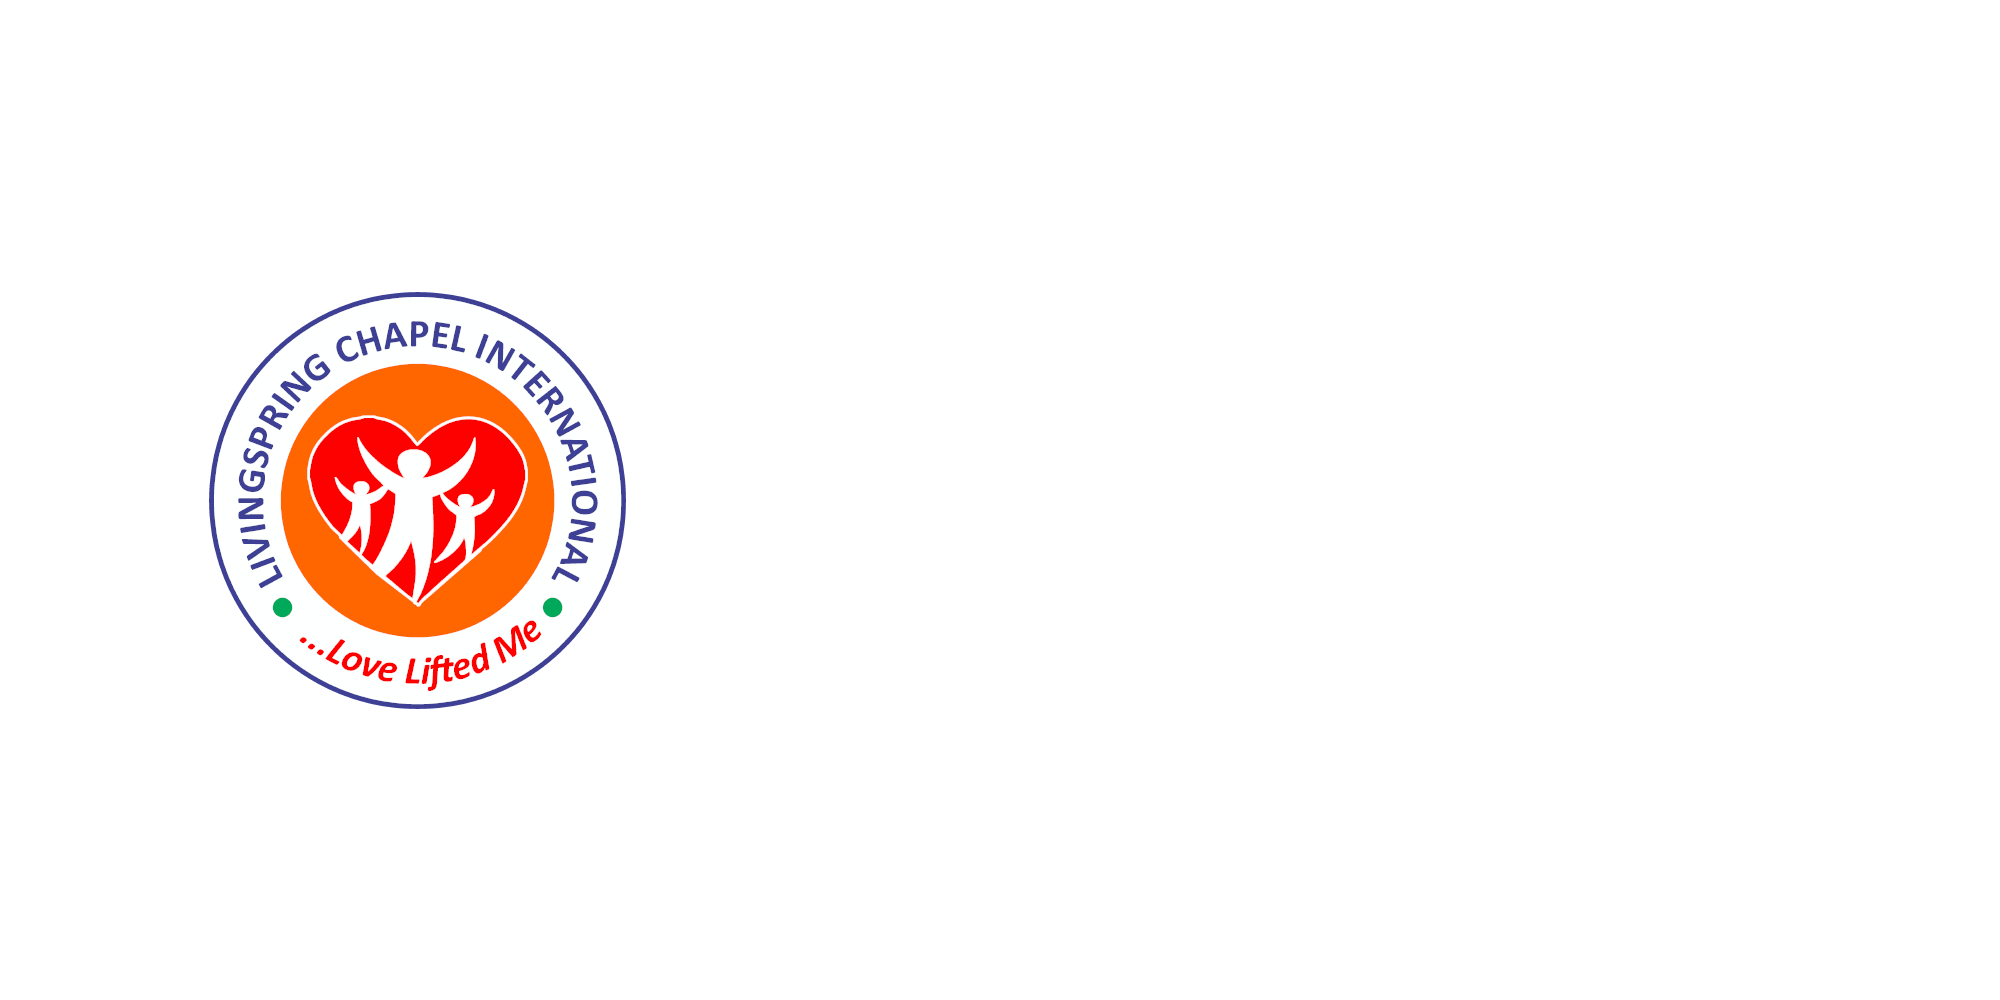 Livingspring Chapel International